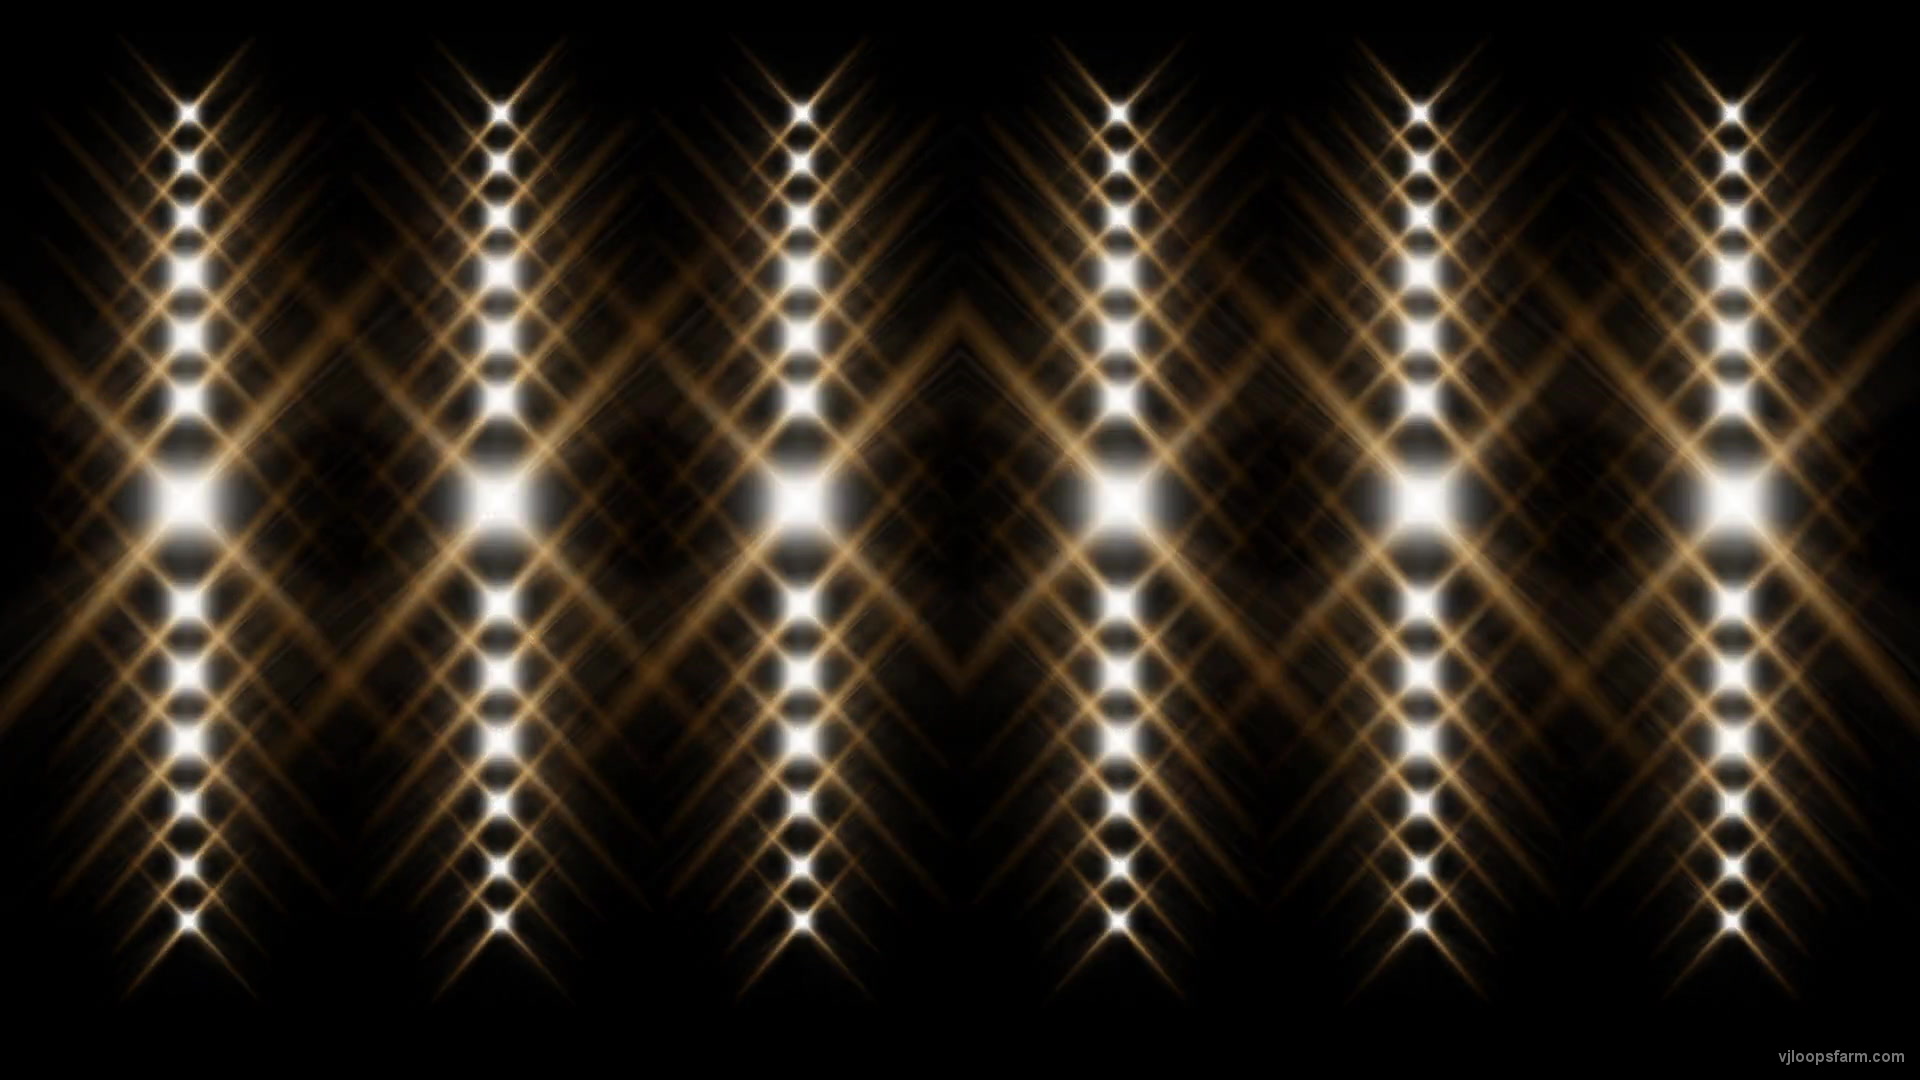 Shine-Lights-columns-pattern-blinking-Ultra-HD-VJ-Loop-mxrygg-1920_007 VJ Loops Farm